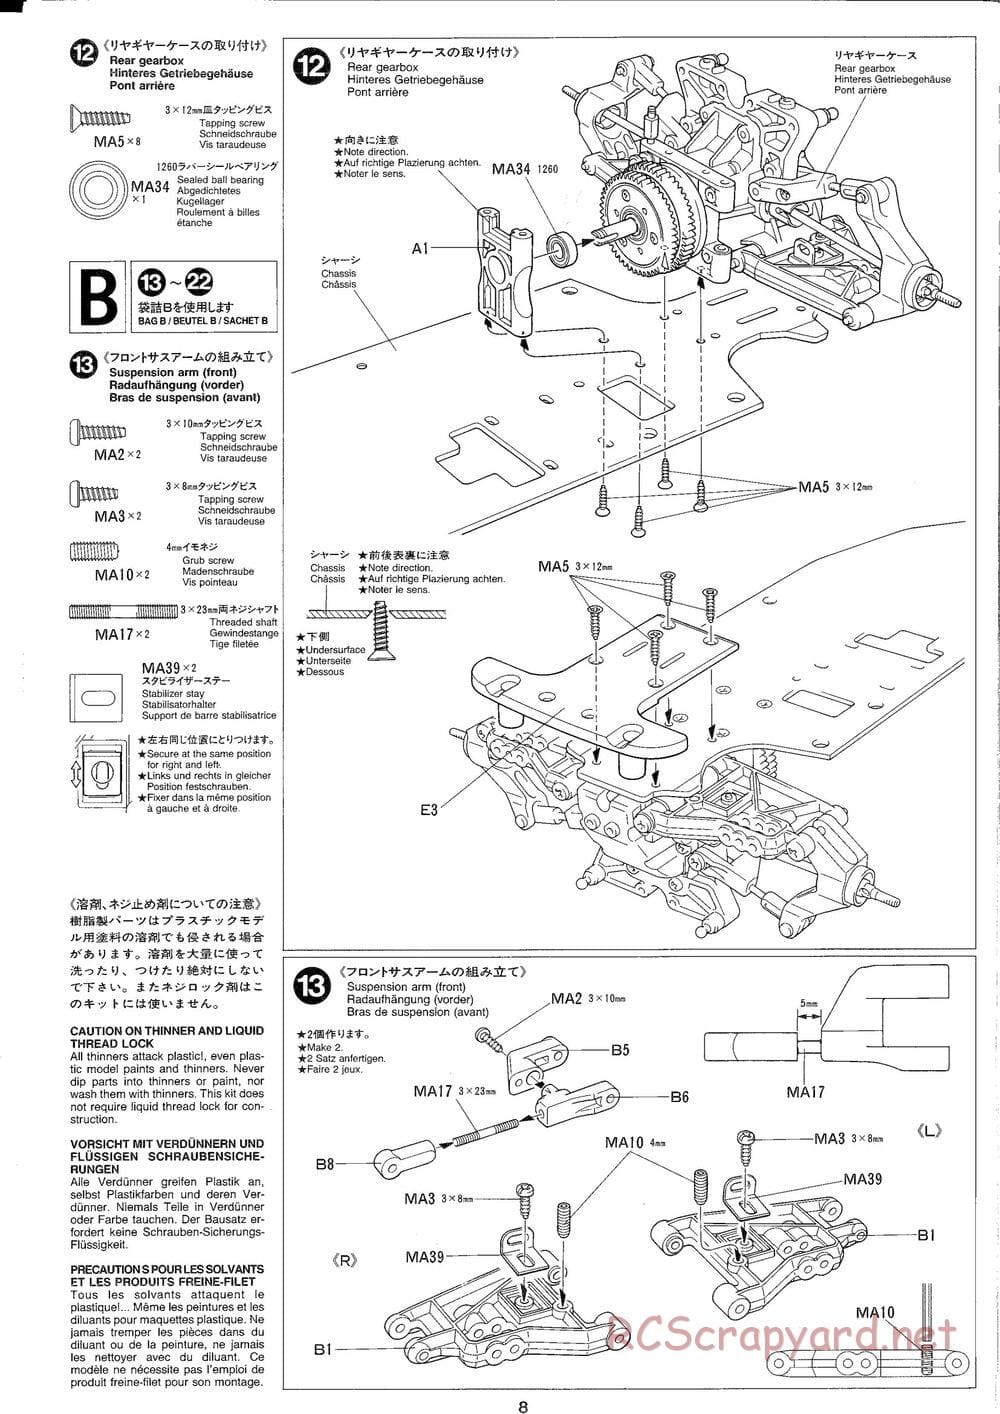 Tamiya - TGX Mk.1 TRF Special Chassis - Manual - Page 8